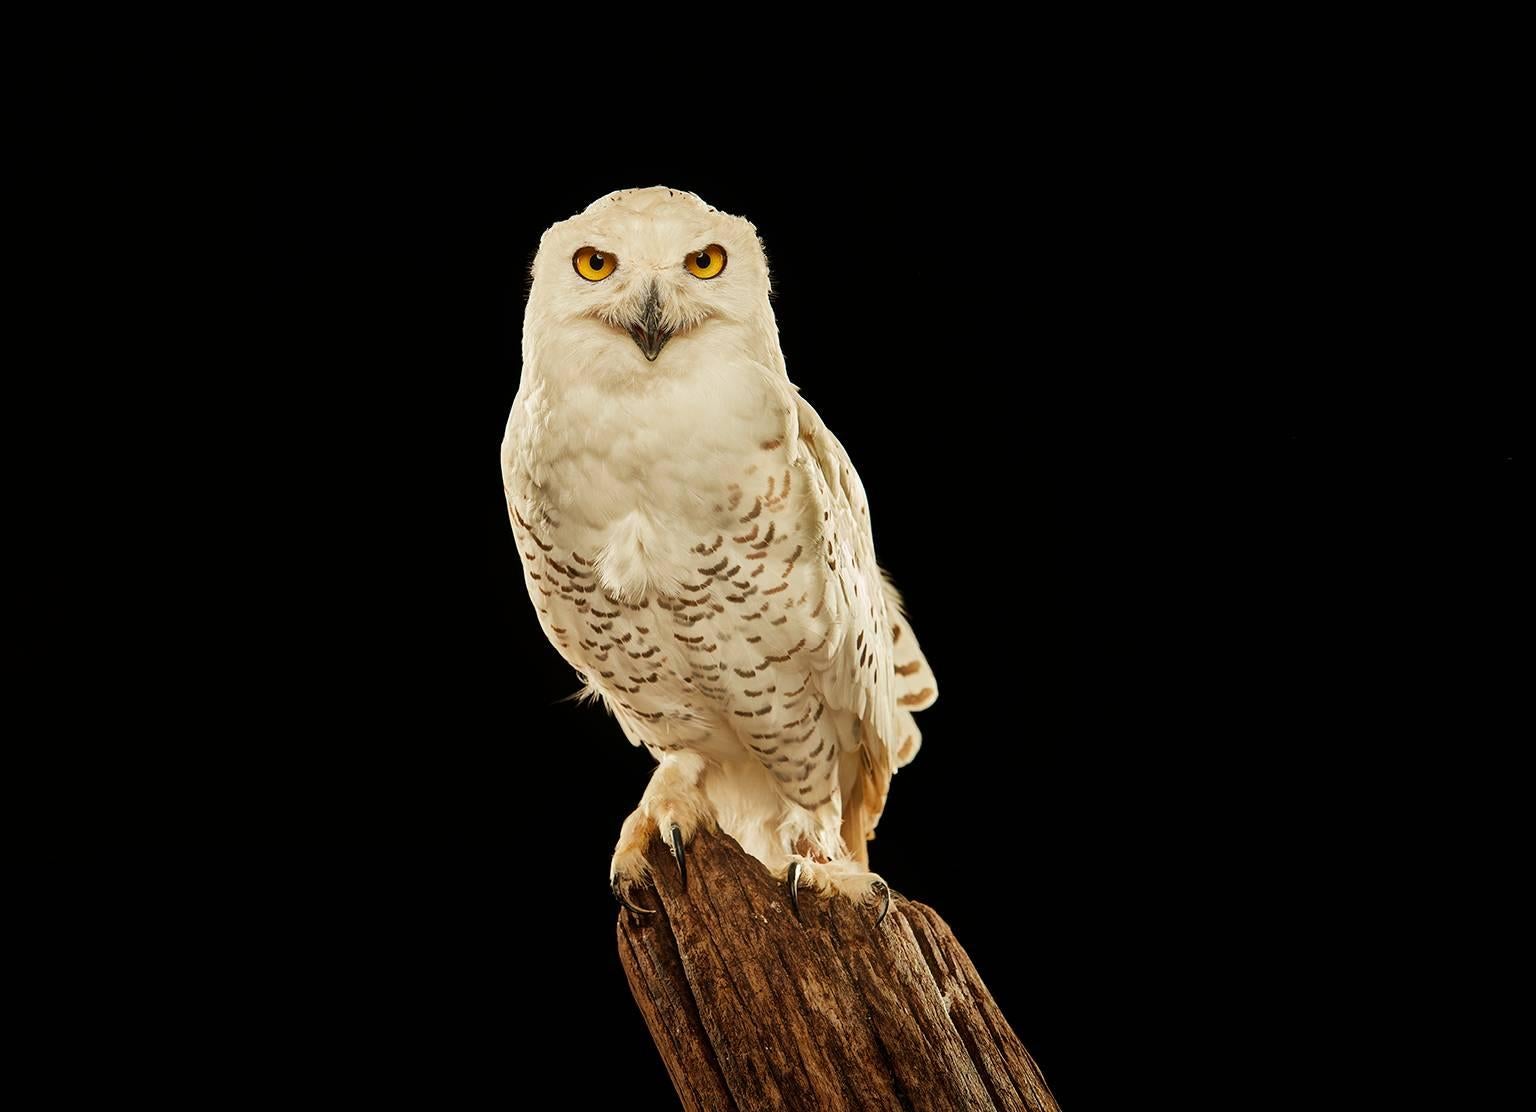 Chris Gordaneer Color Photograph - Birds of Prey - Snowy Owl No. 11